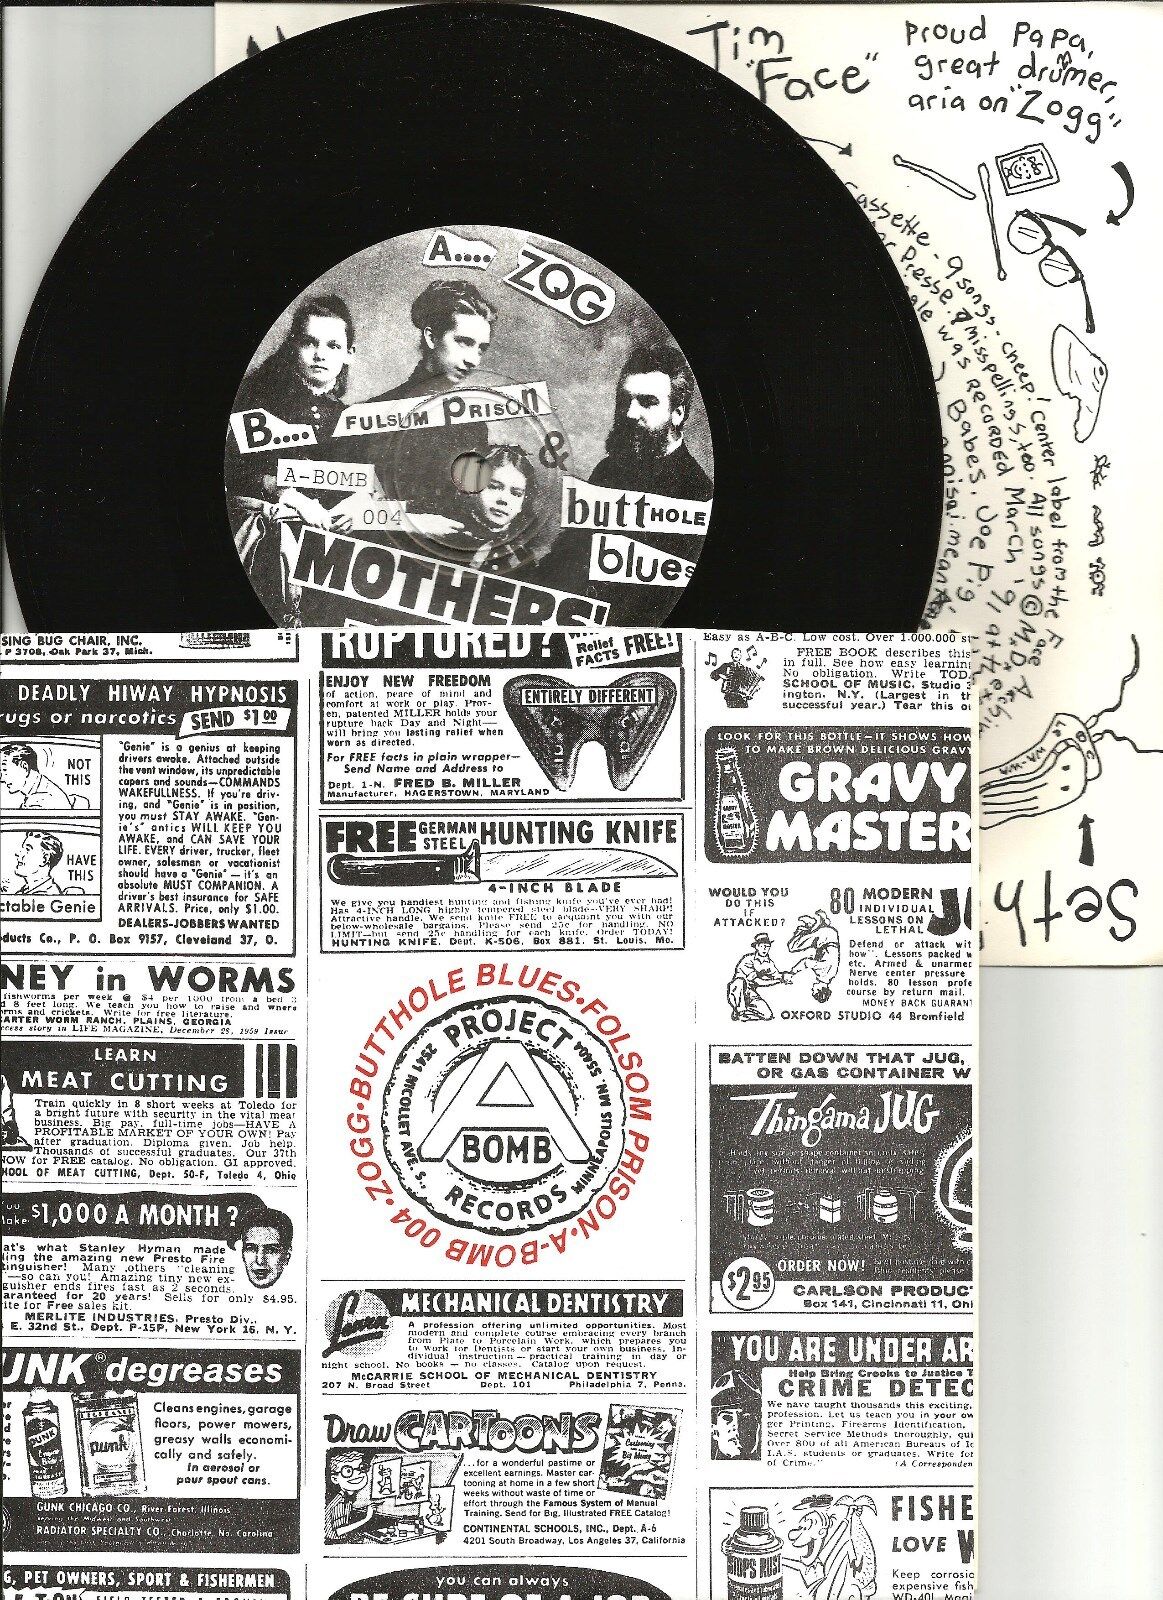 MOTHERS DAY Zog 3 UNRELEASE TRX 7 INCH Vinyl w/ JOHNNY CASH TRK Folsom Prison